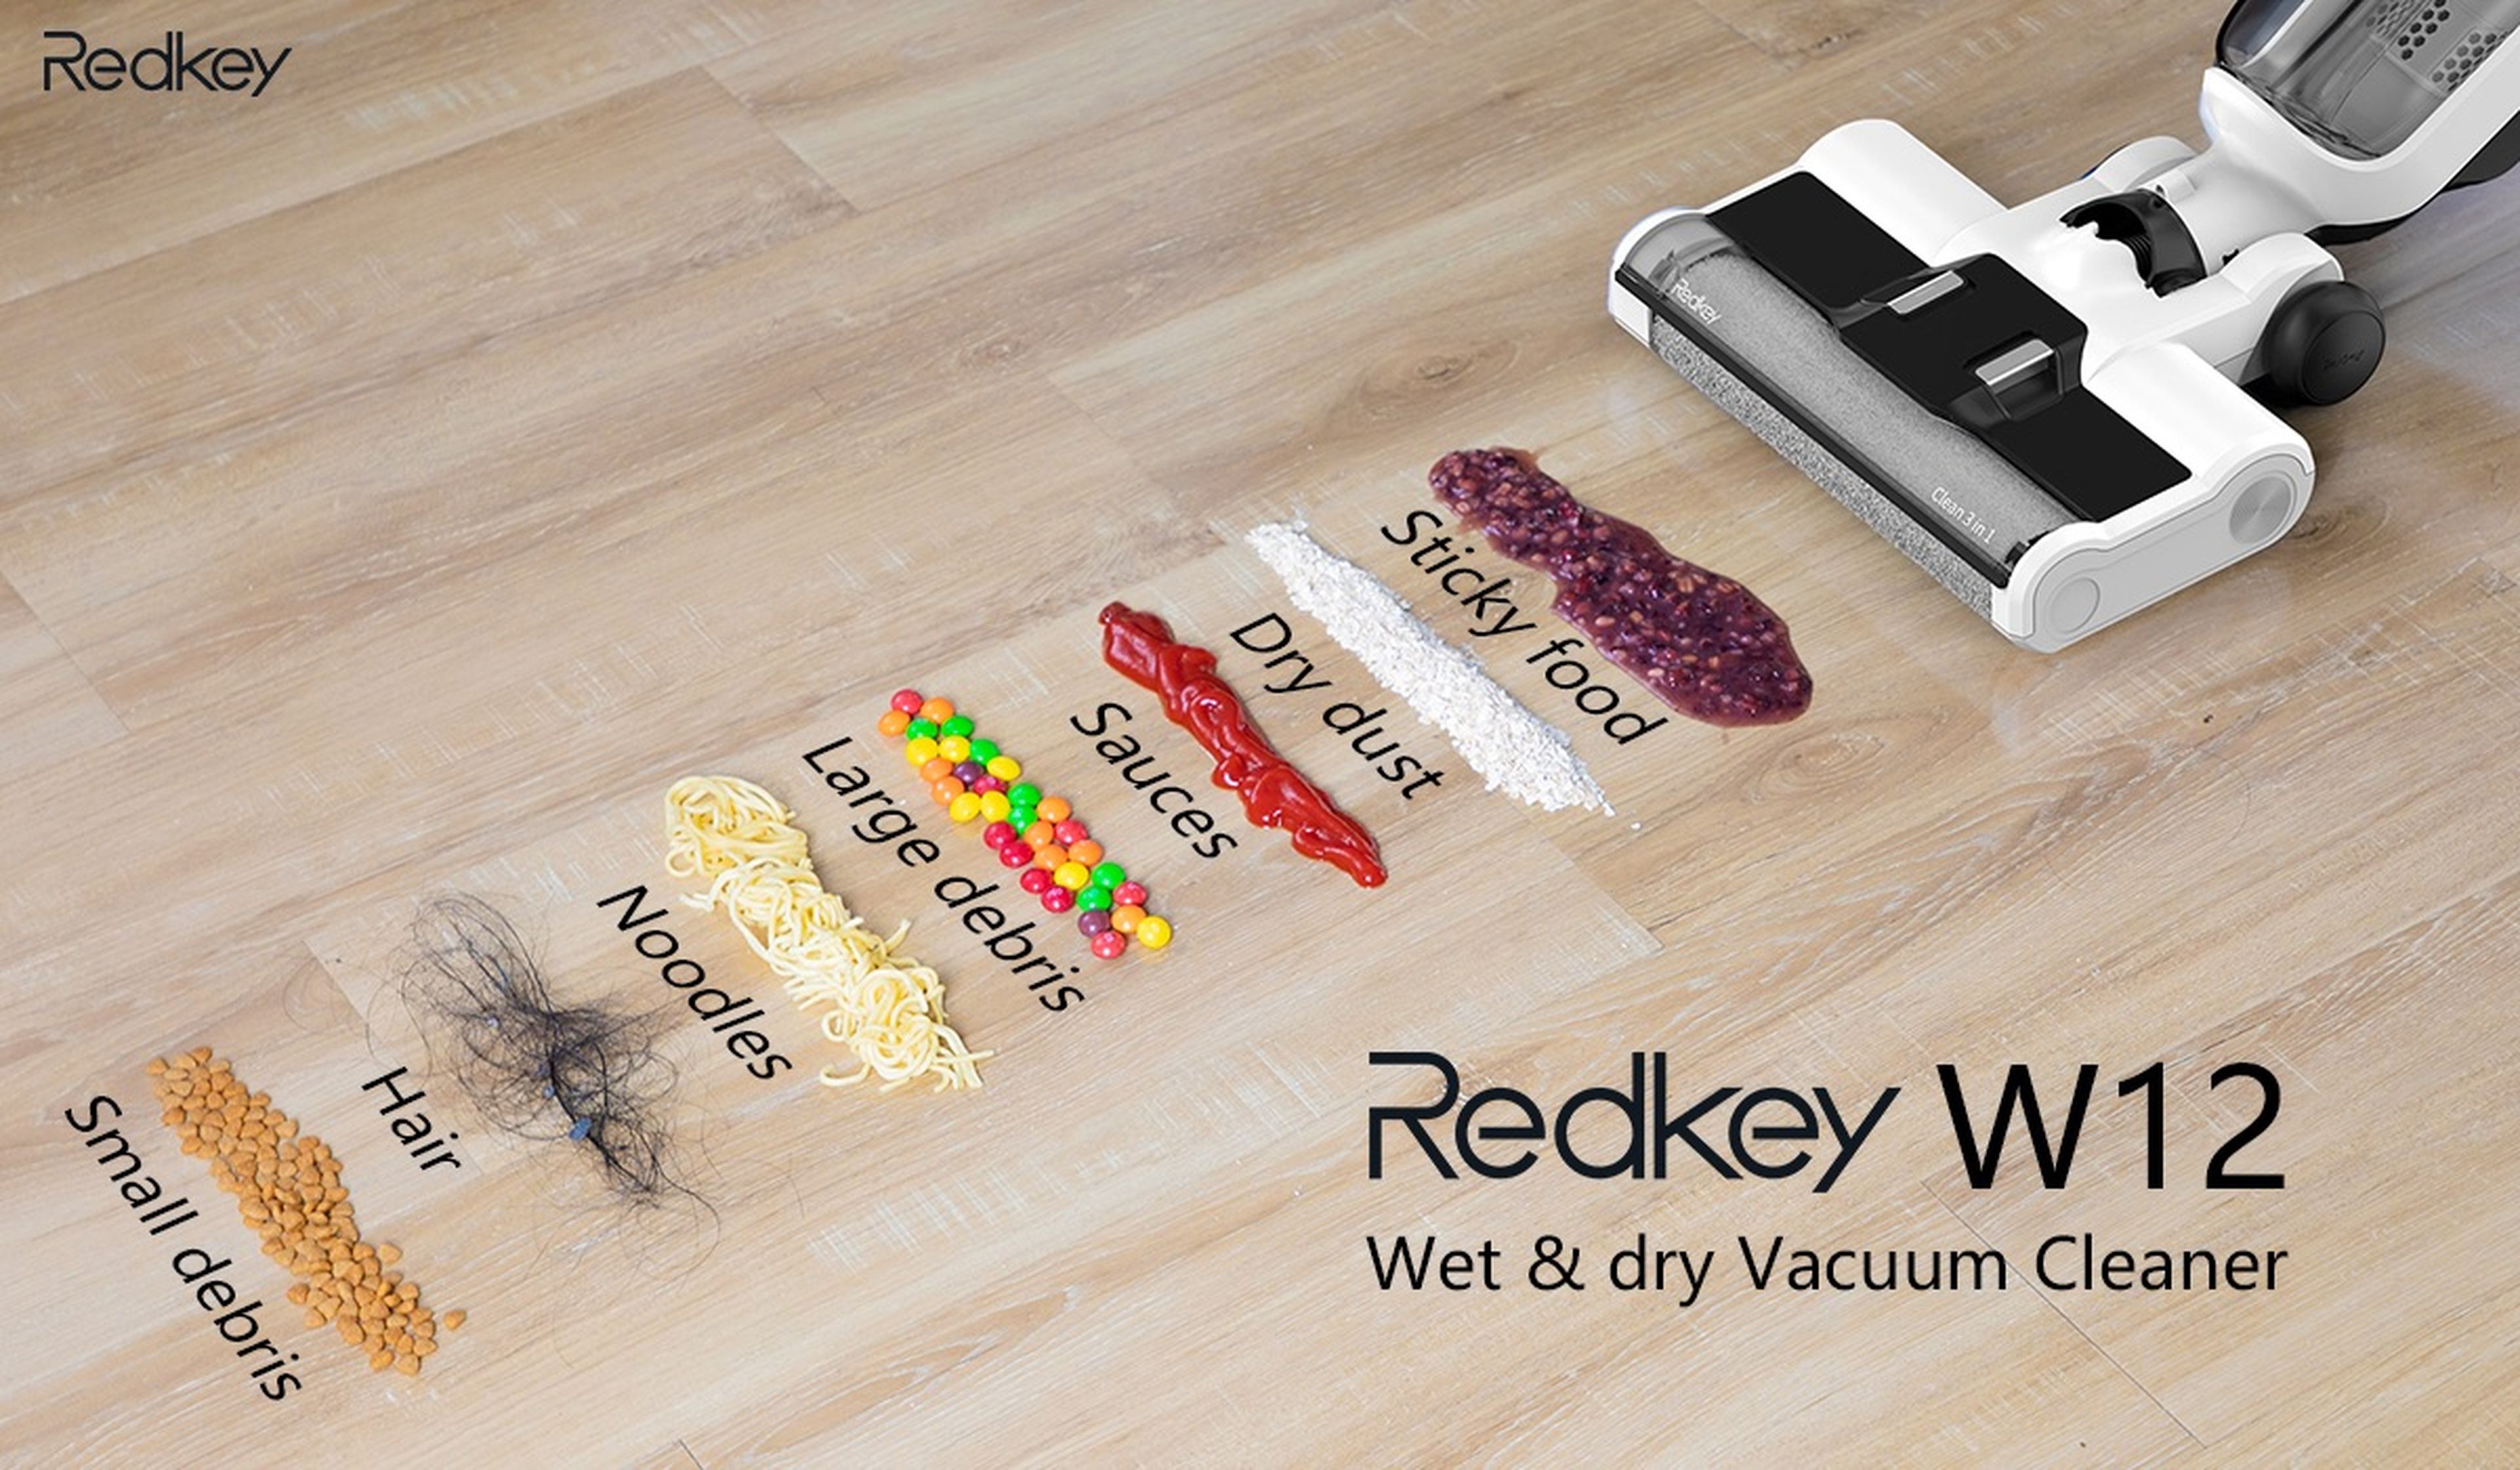 Redkey W12 vacuum cleaner